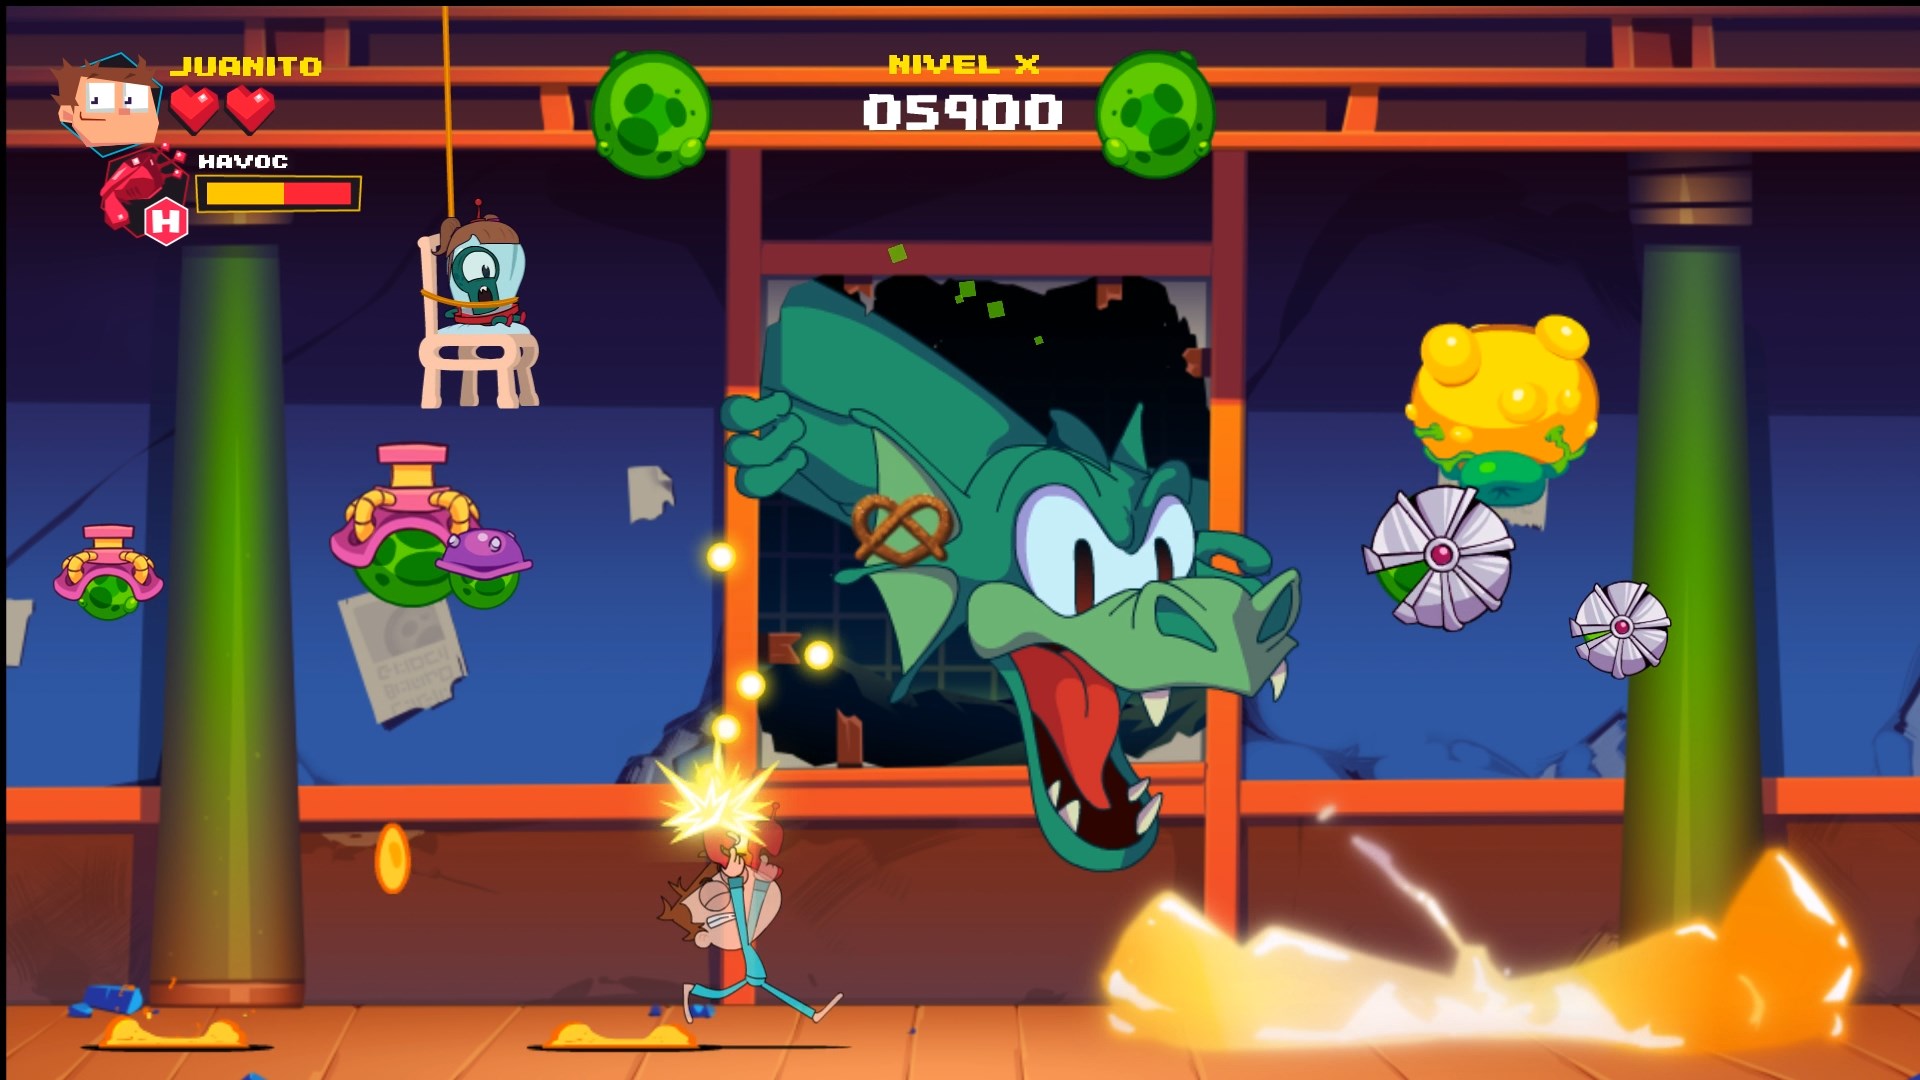 Arcade Mayhem Juanito screenshot